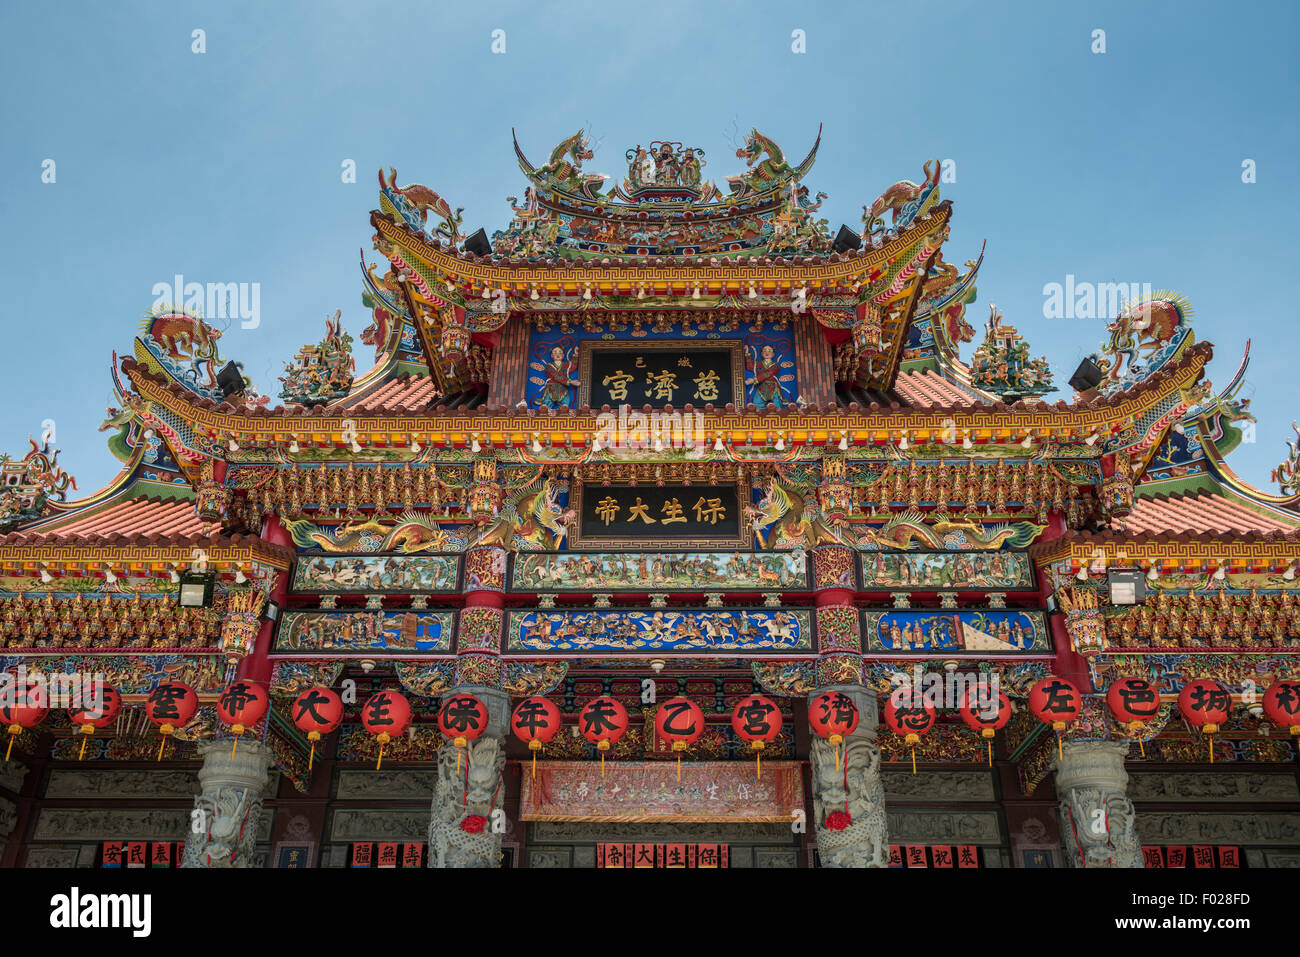 Cih ji Palace Temple by the Lotus Pond, Kaohsiung, Taiwan Stock Photo